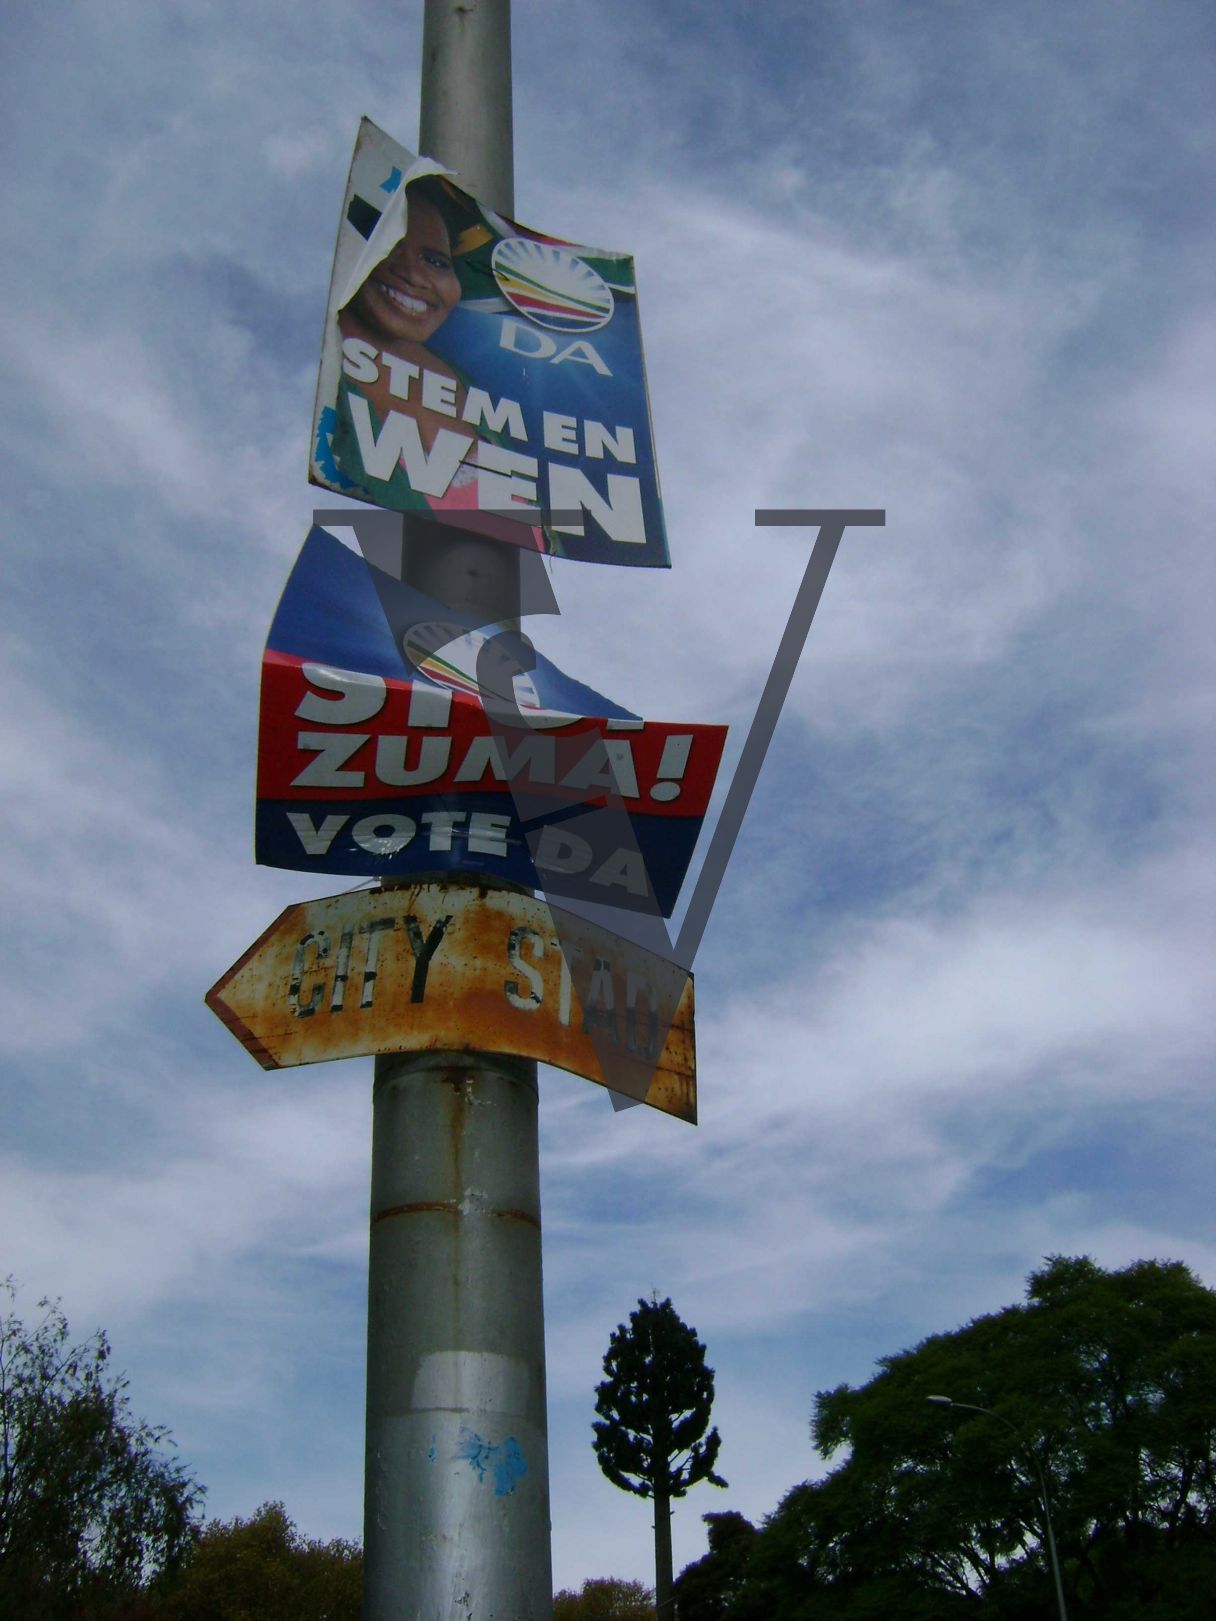 Johannesburg, political posters, Stem En Wen, Vote Da, City Stad.